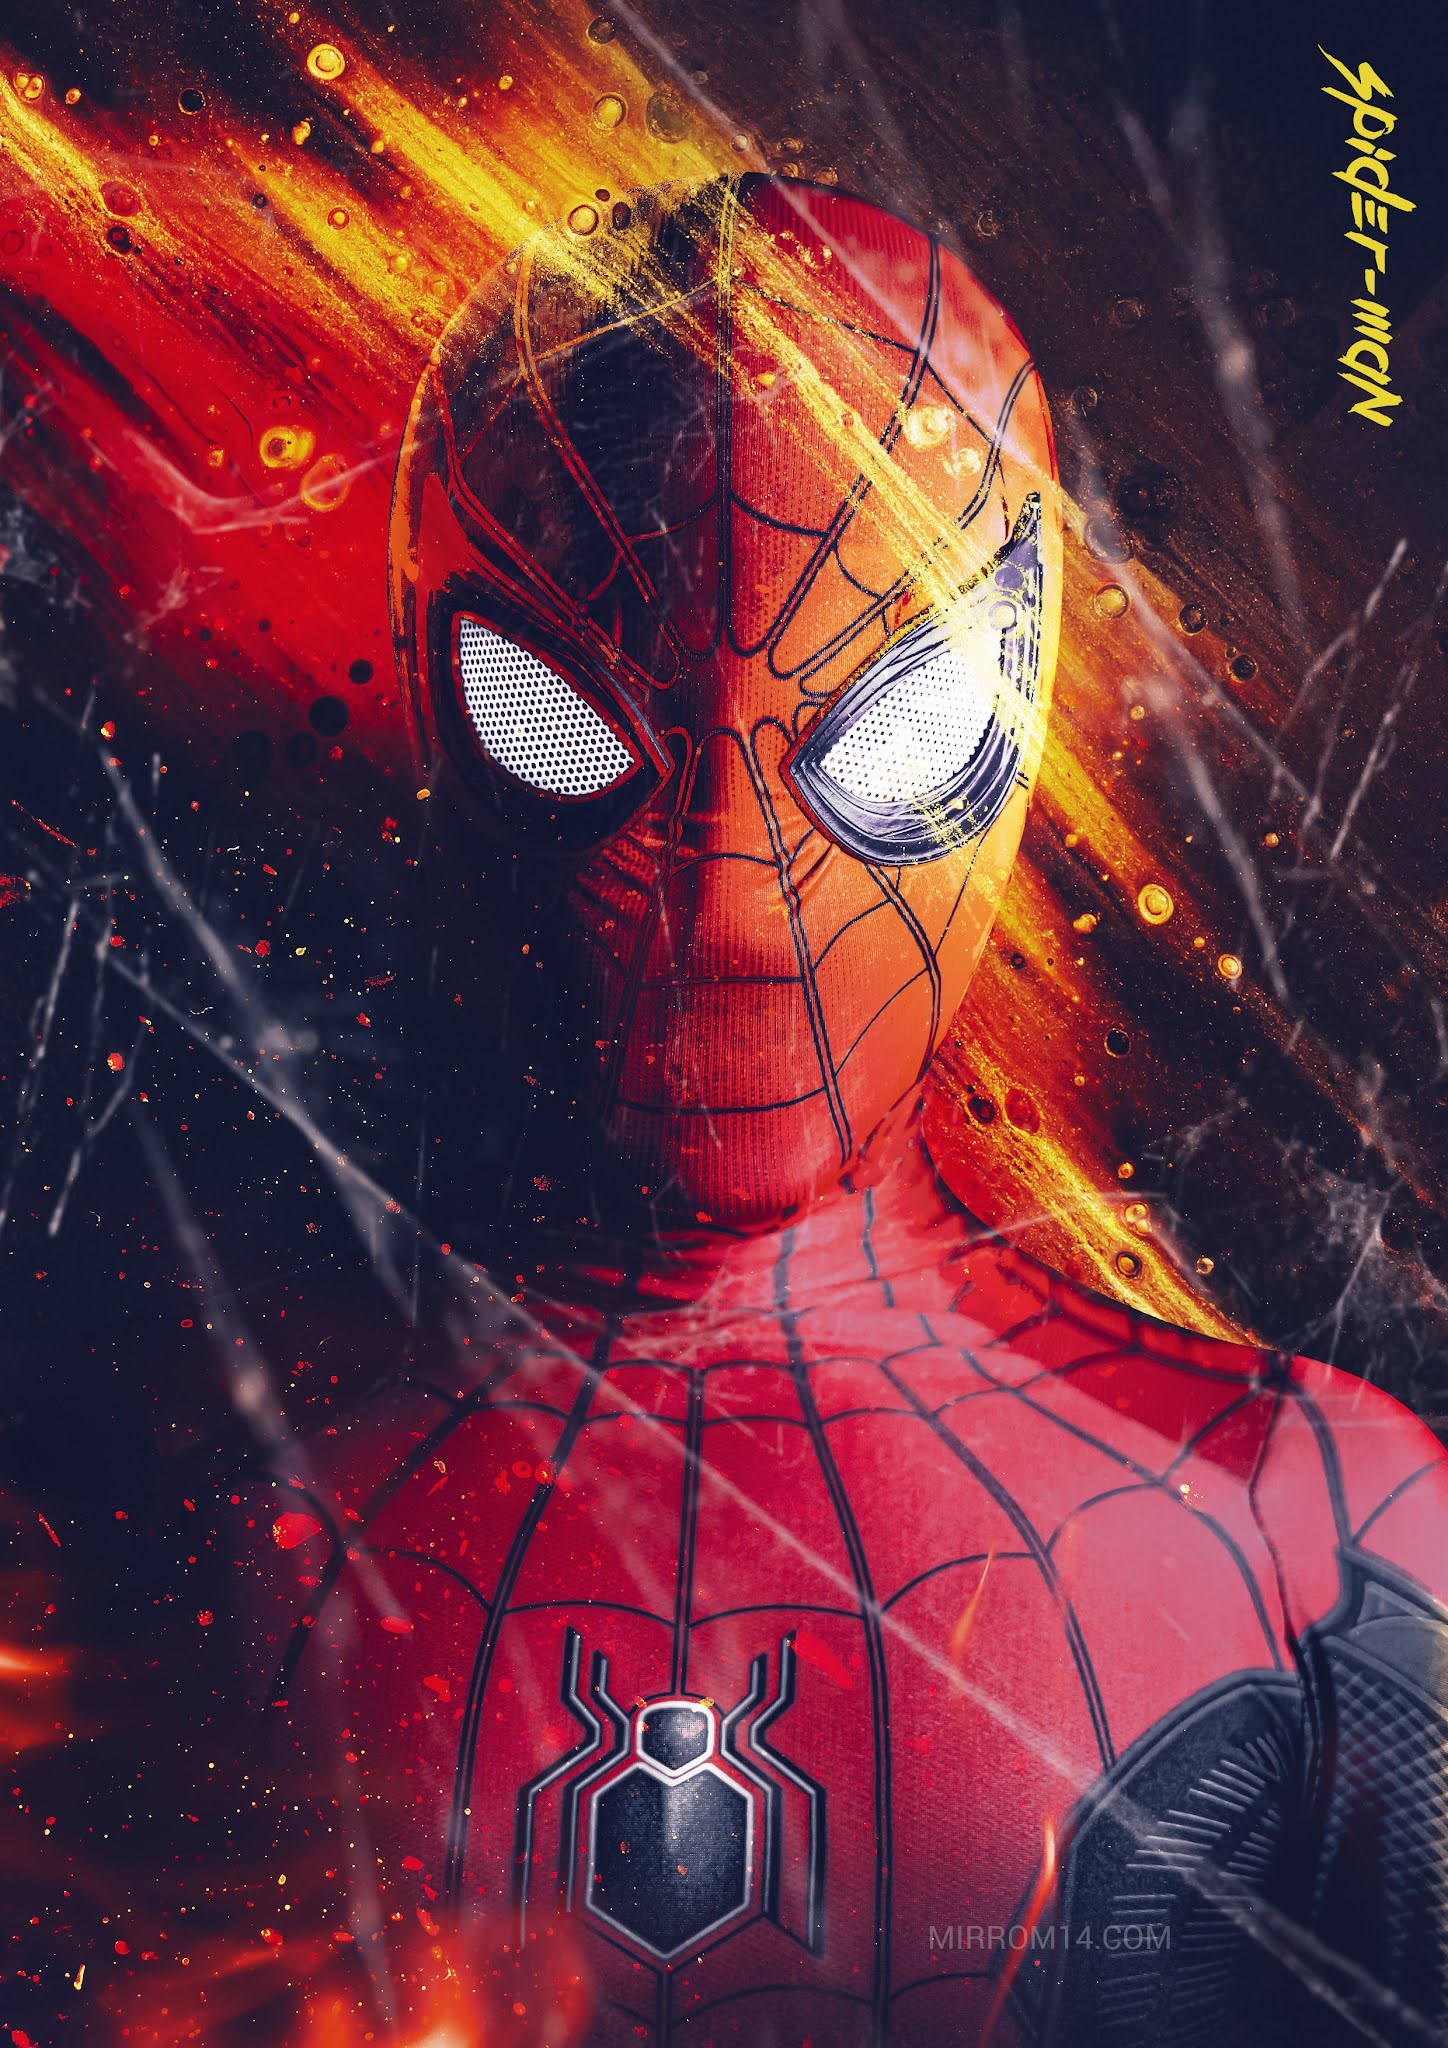 Create a Spider-Man Poster Art - Photoshop Tutorial